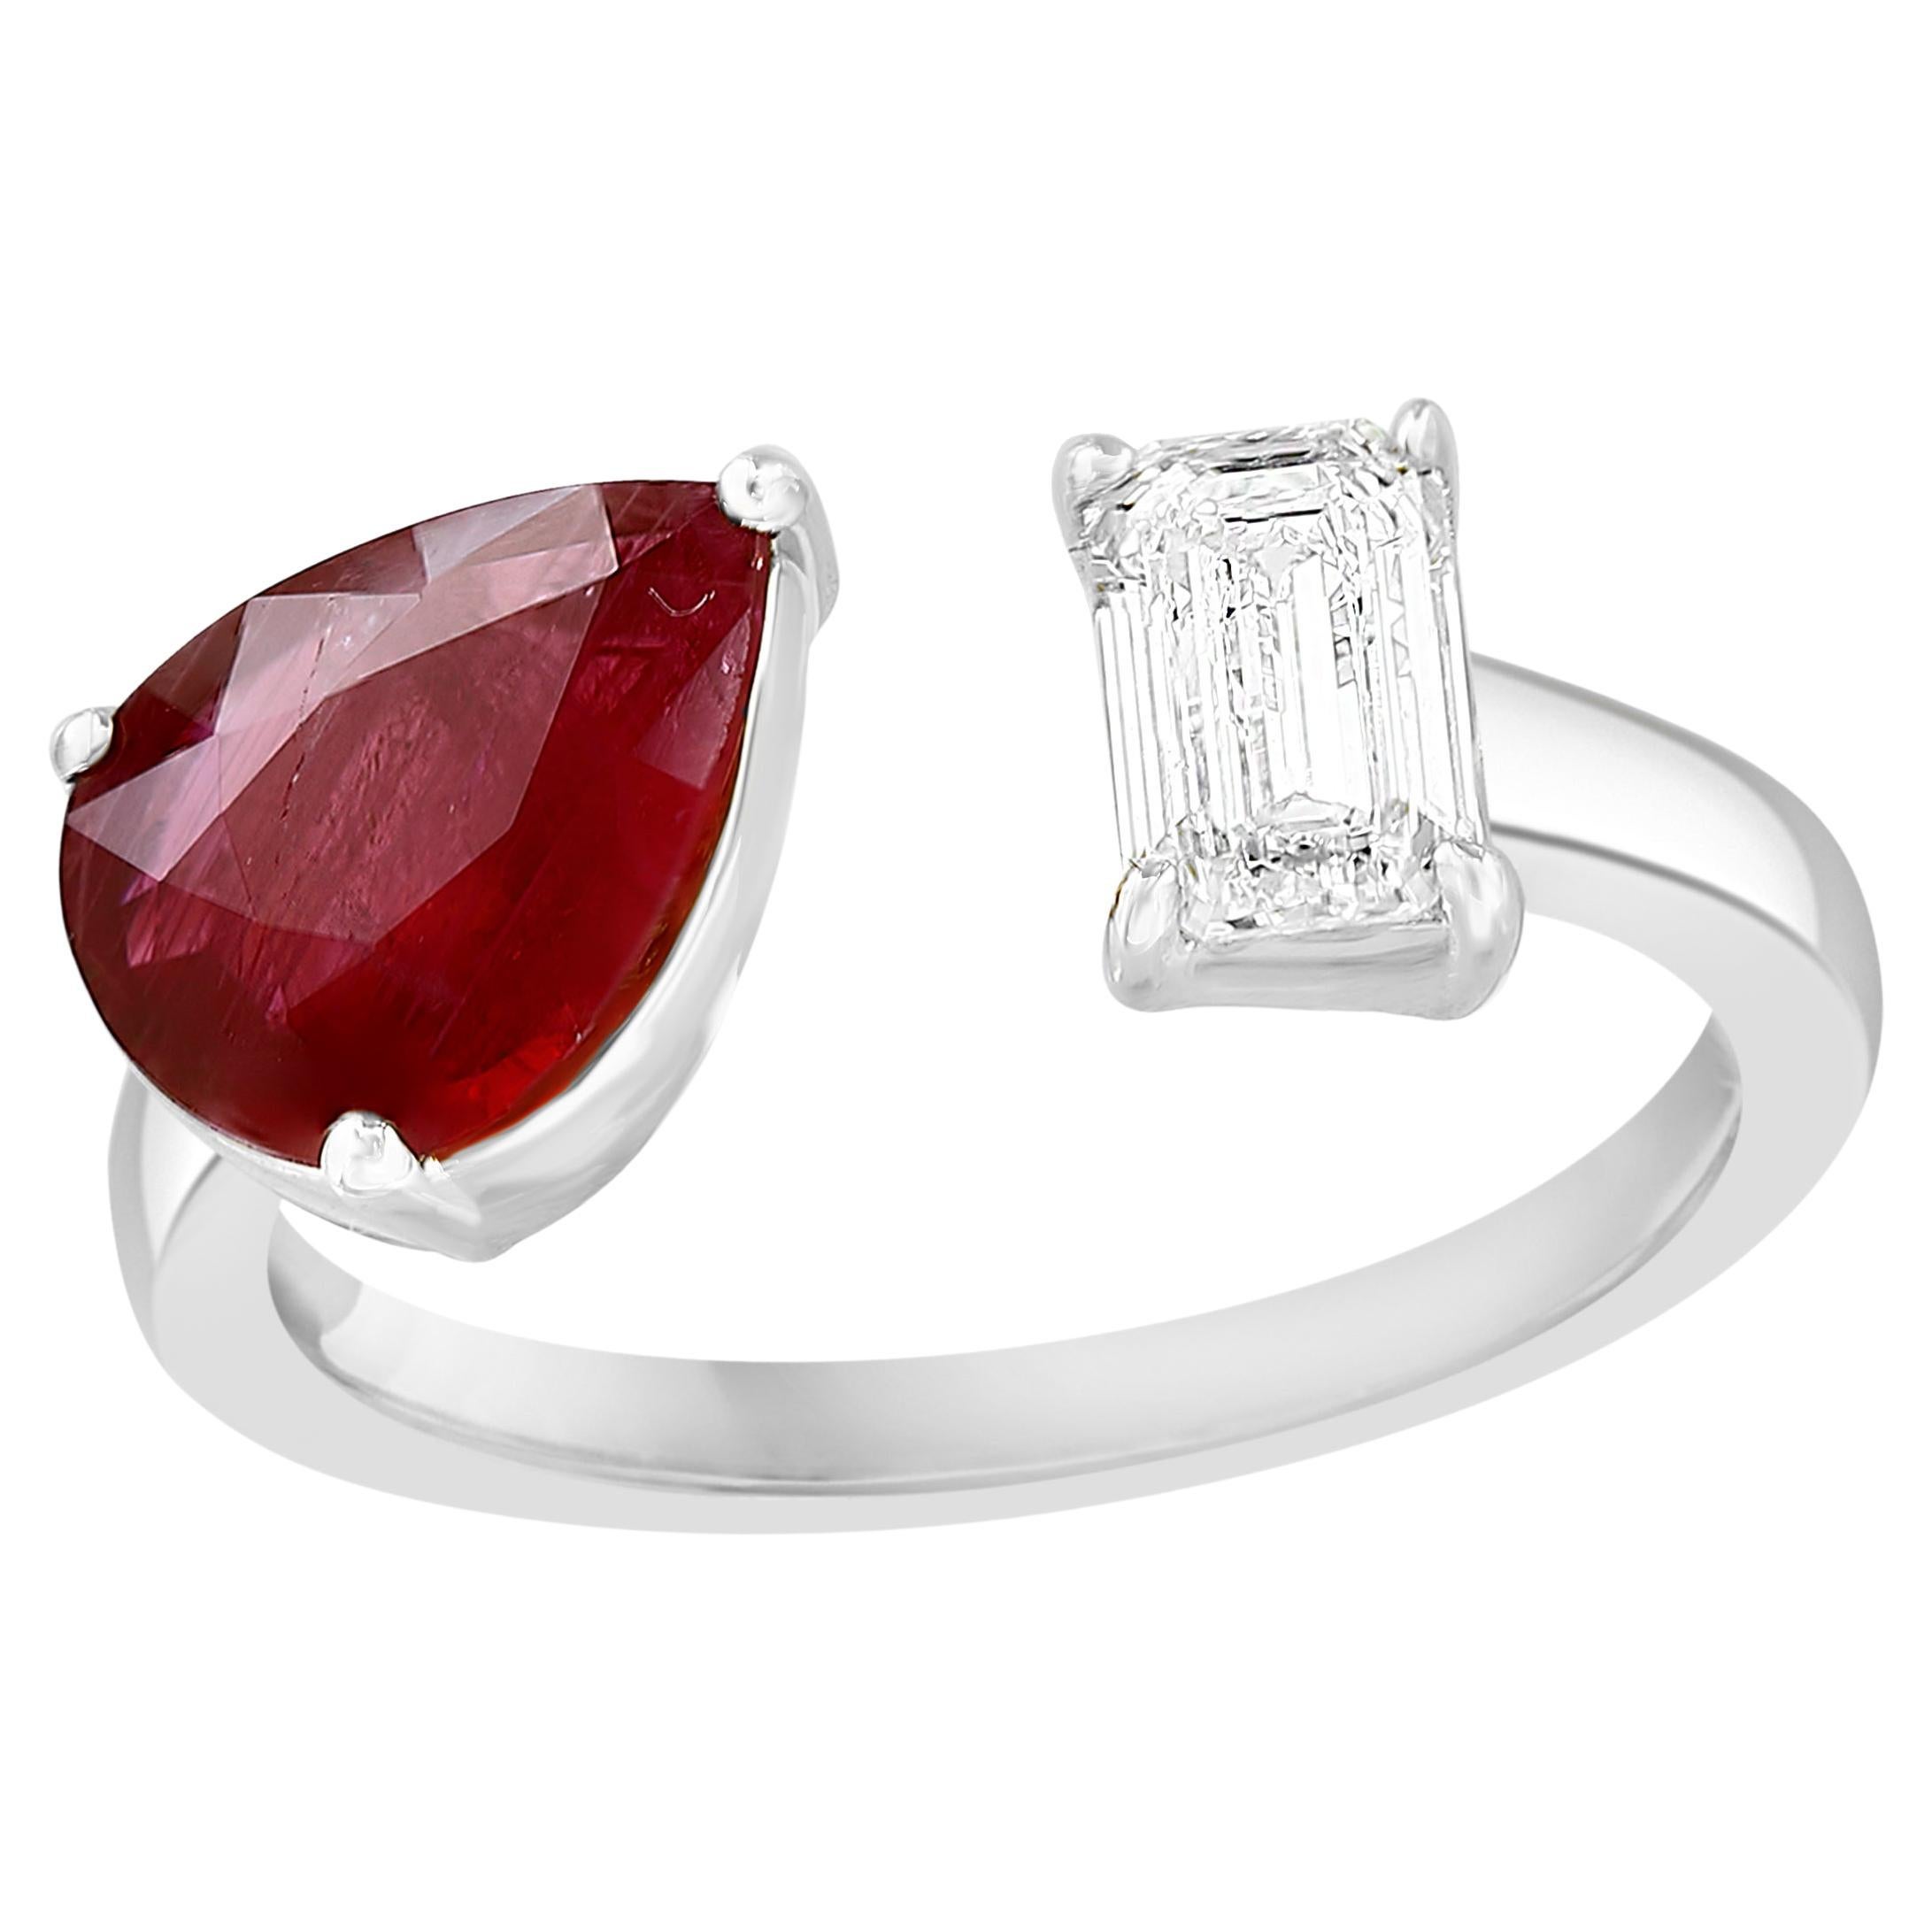 1.29 Carat Pear Shape Ruby Diamond Toi Et Moi Engagement Ring in 14K White Gold For Sale